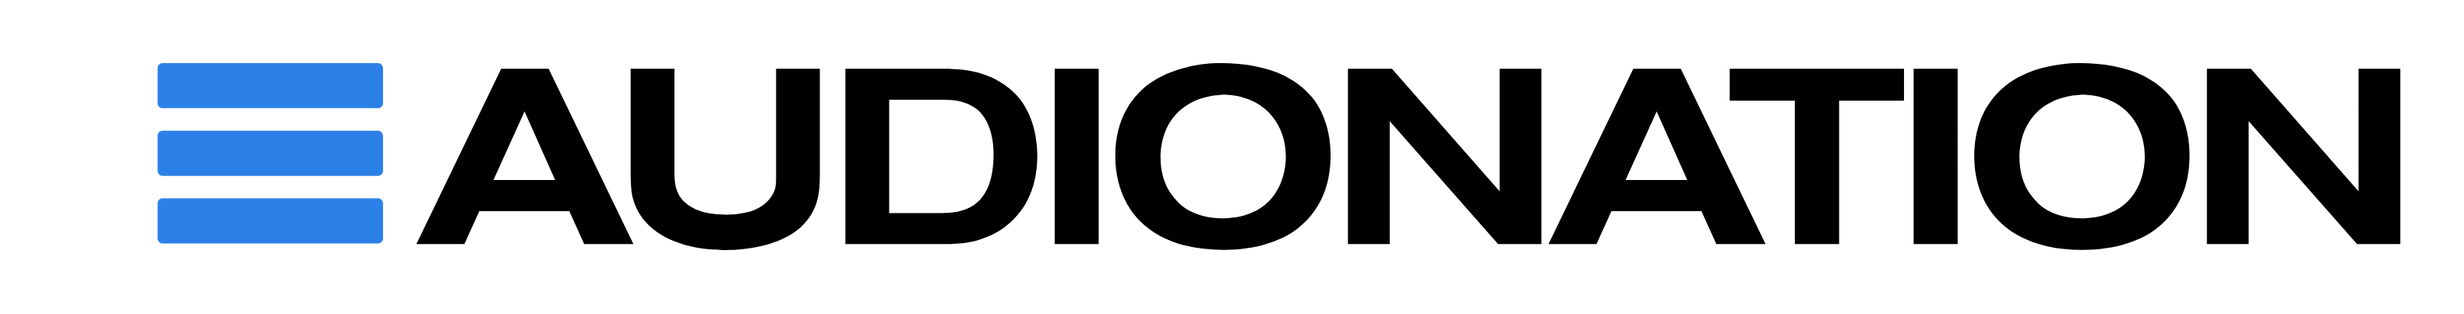 Audionation logo